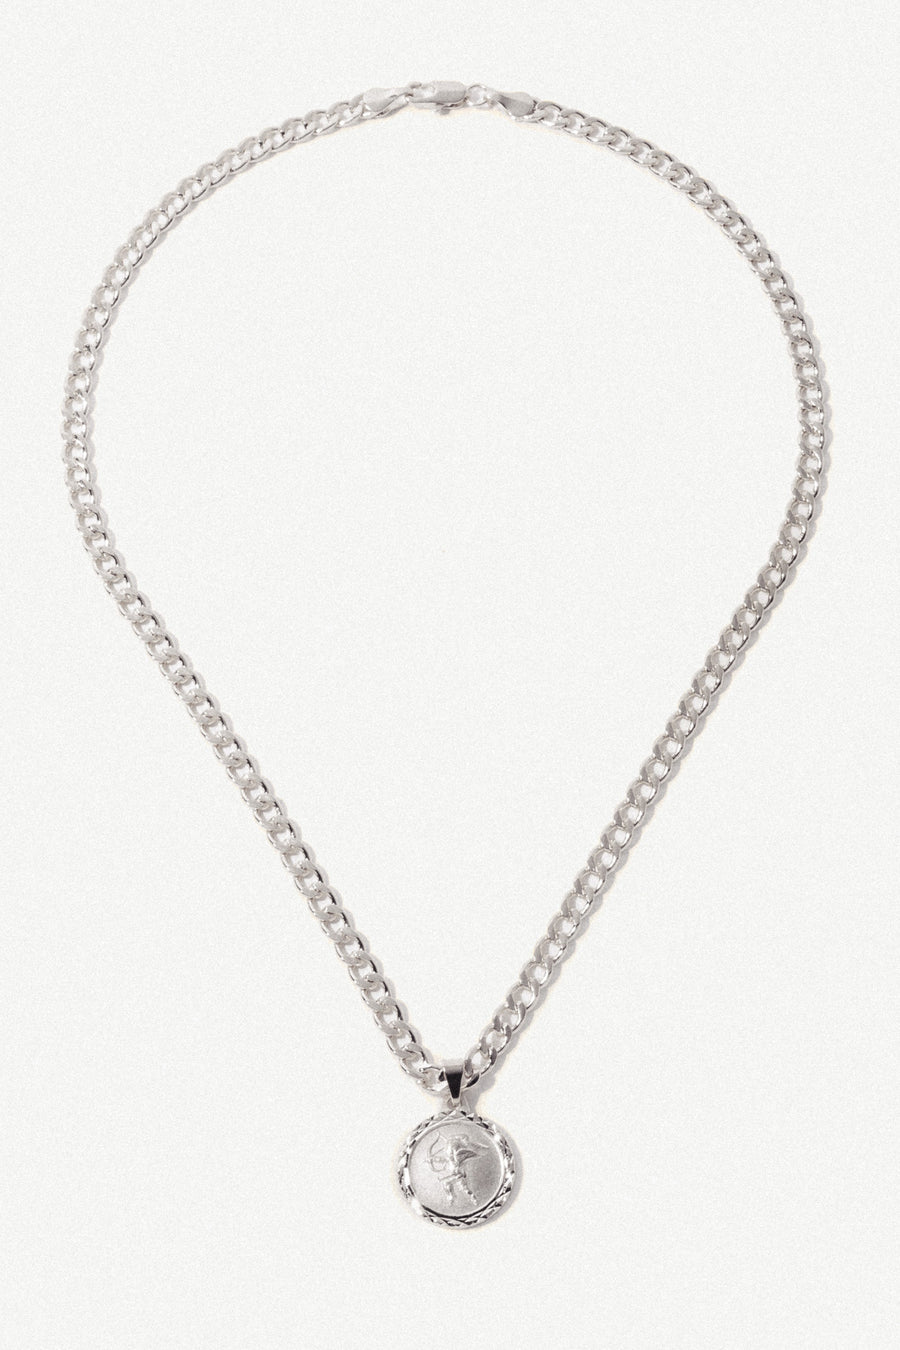 Dona Italia Jewelry Silver / 18 Inches The Cupid Necklace .:. Silver